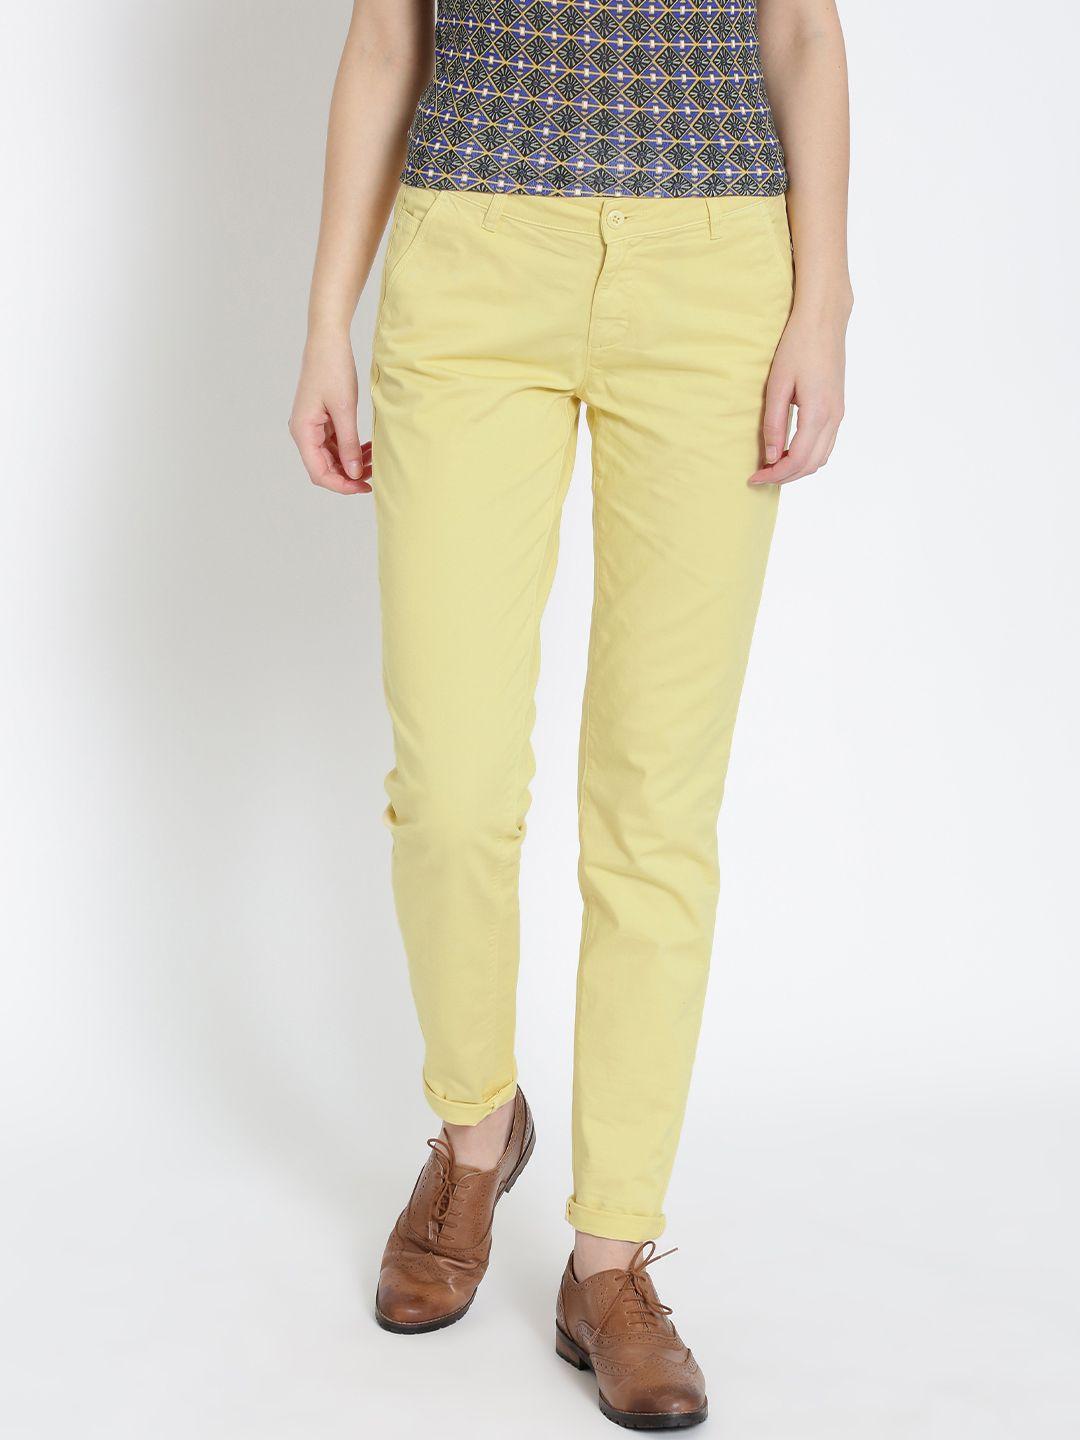 u.s. polo assn. women yellow comfort fit casual trousers